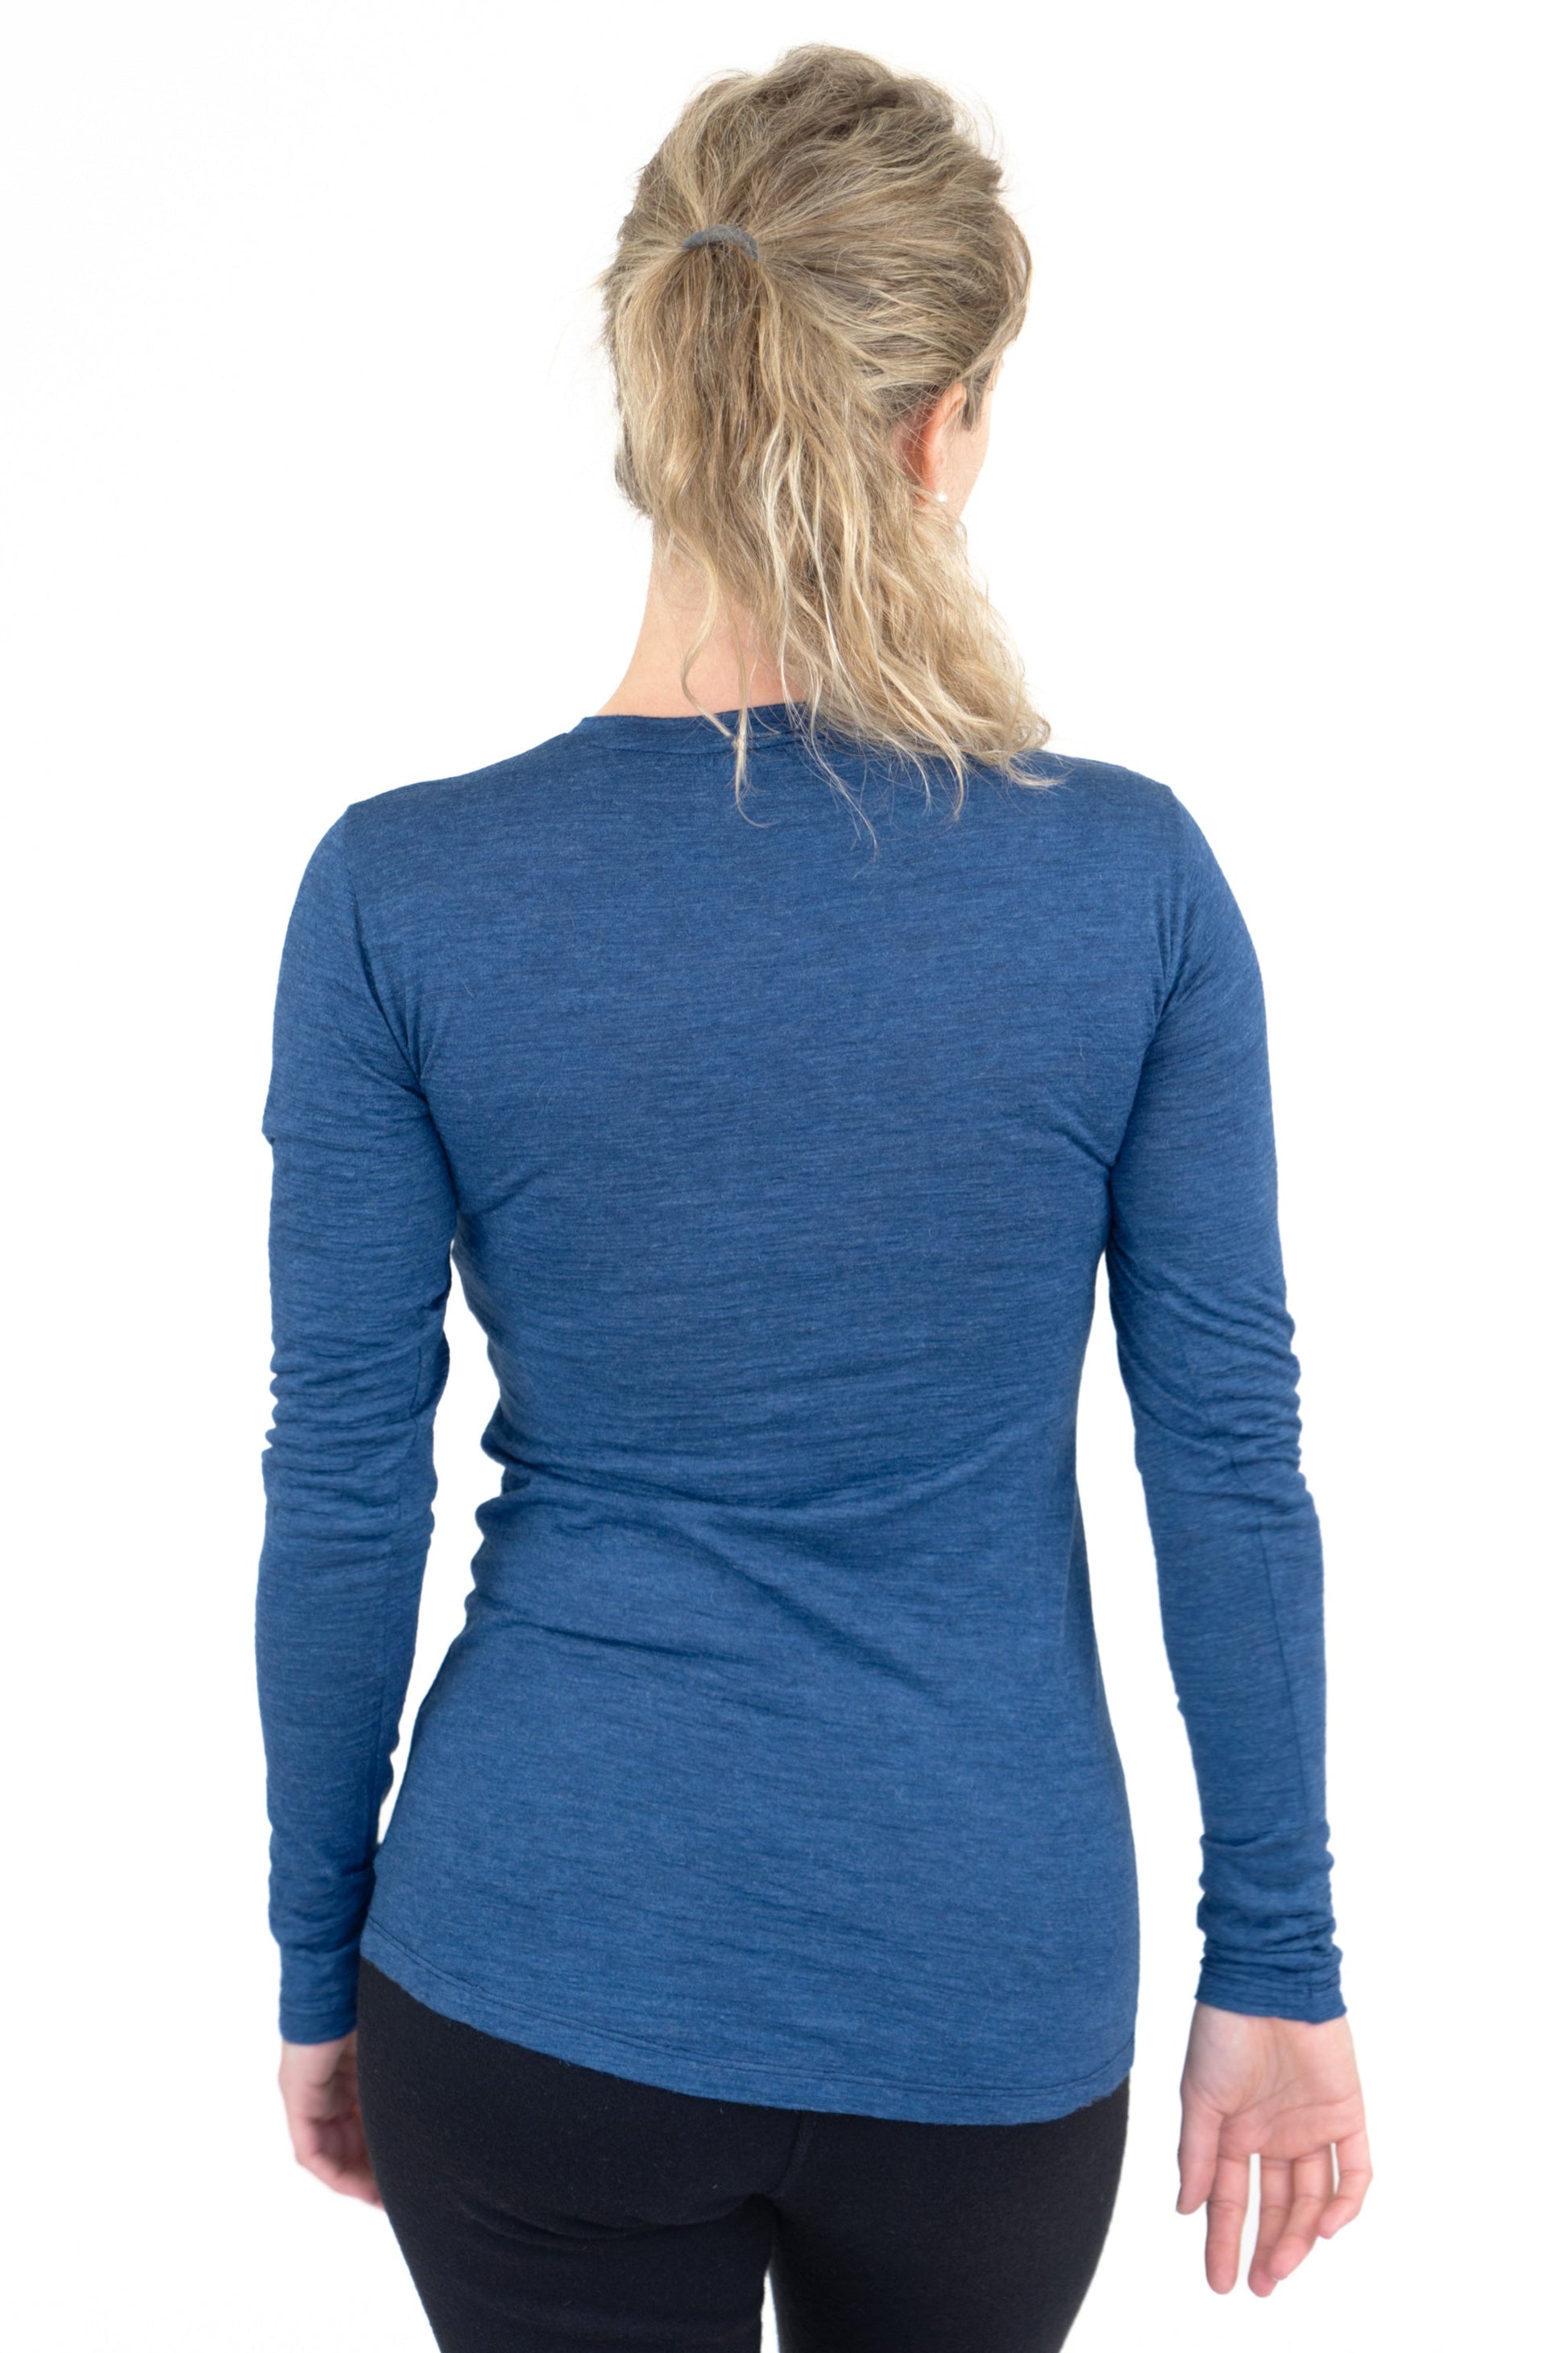 Women's Alpaca Wool Long Sleeve Base Layer: 110 Ultralight color Natural Blue